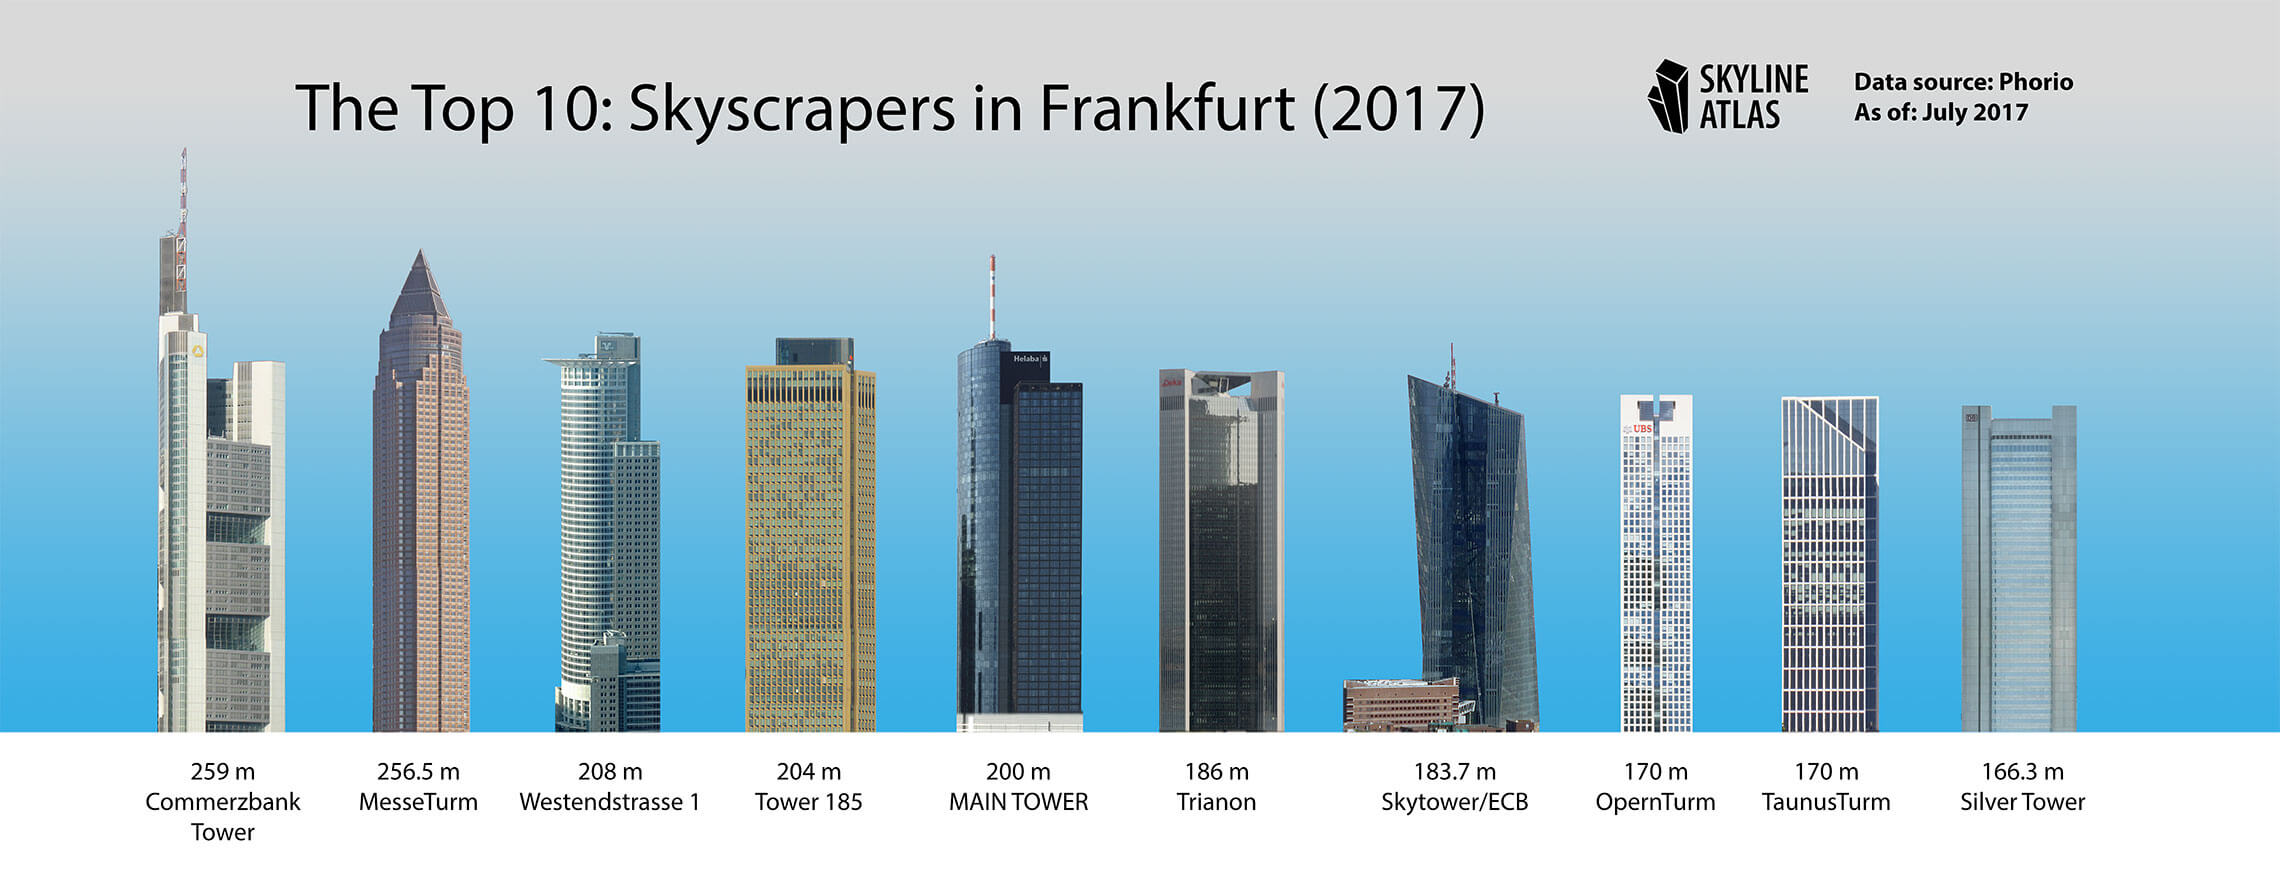 Comparison of Towers - Frankfurt Skyscrapers - Skyline Atlas